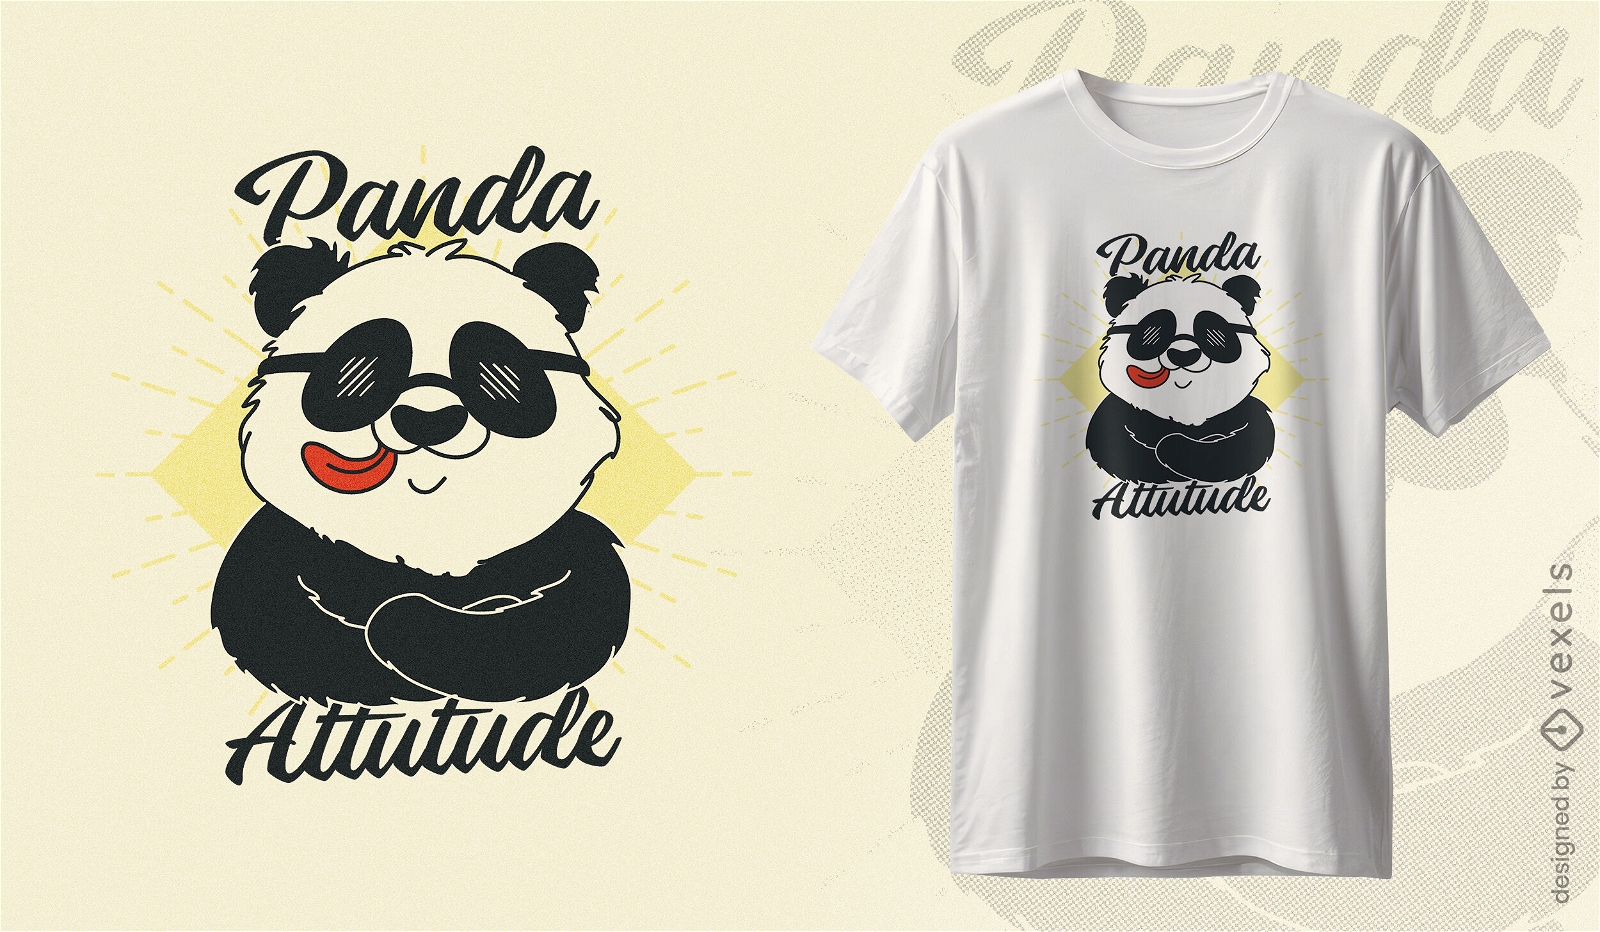 Panda attitude t-shirt design